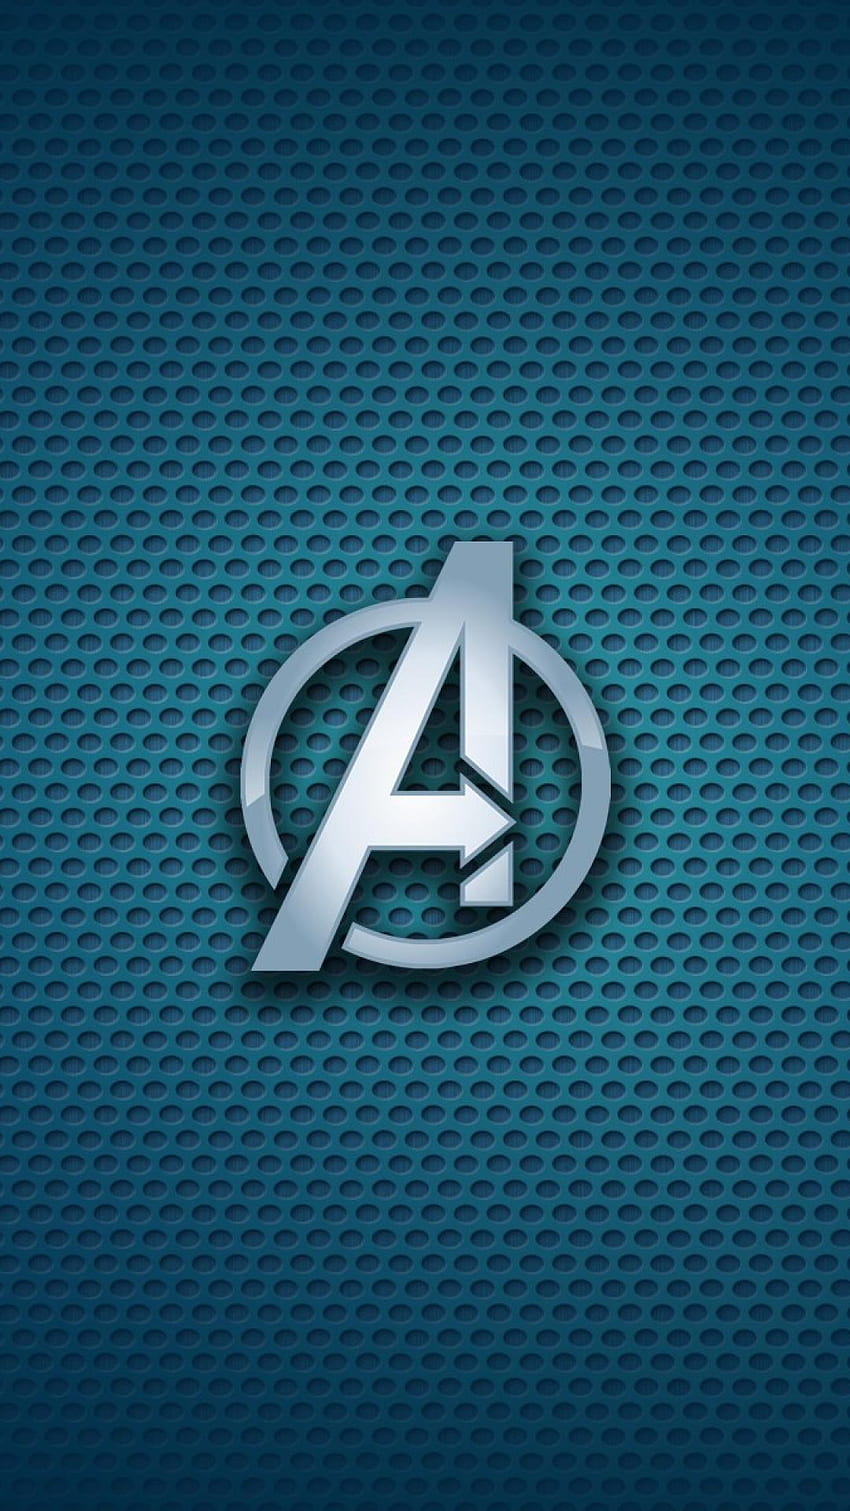 The avengers emblems logos blue background symbols, Marvel Avengers Mobile HD phone wallpaper